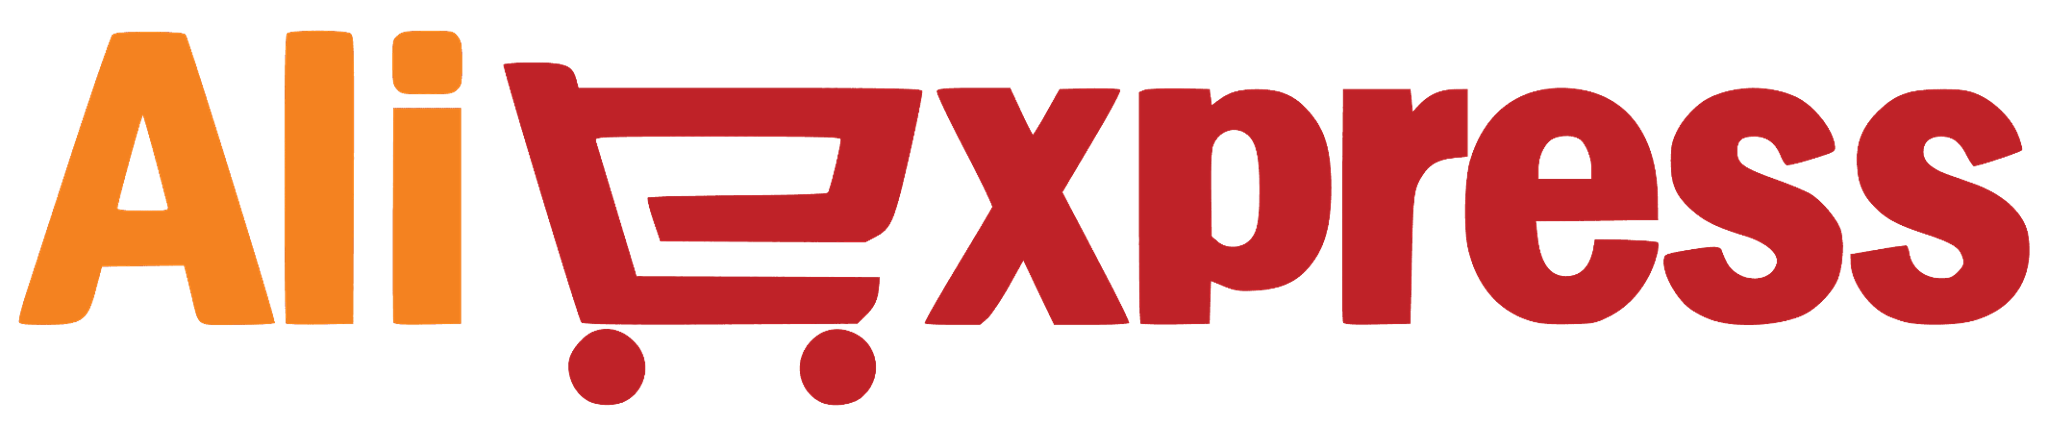 Ali express logo